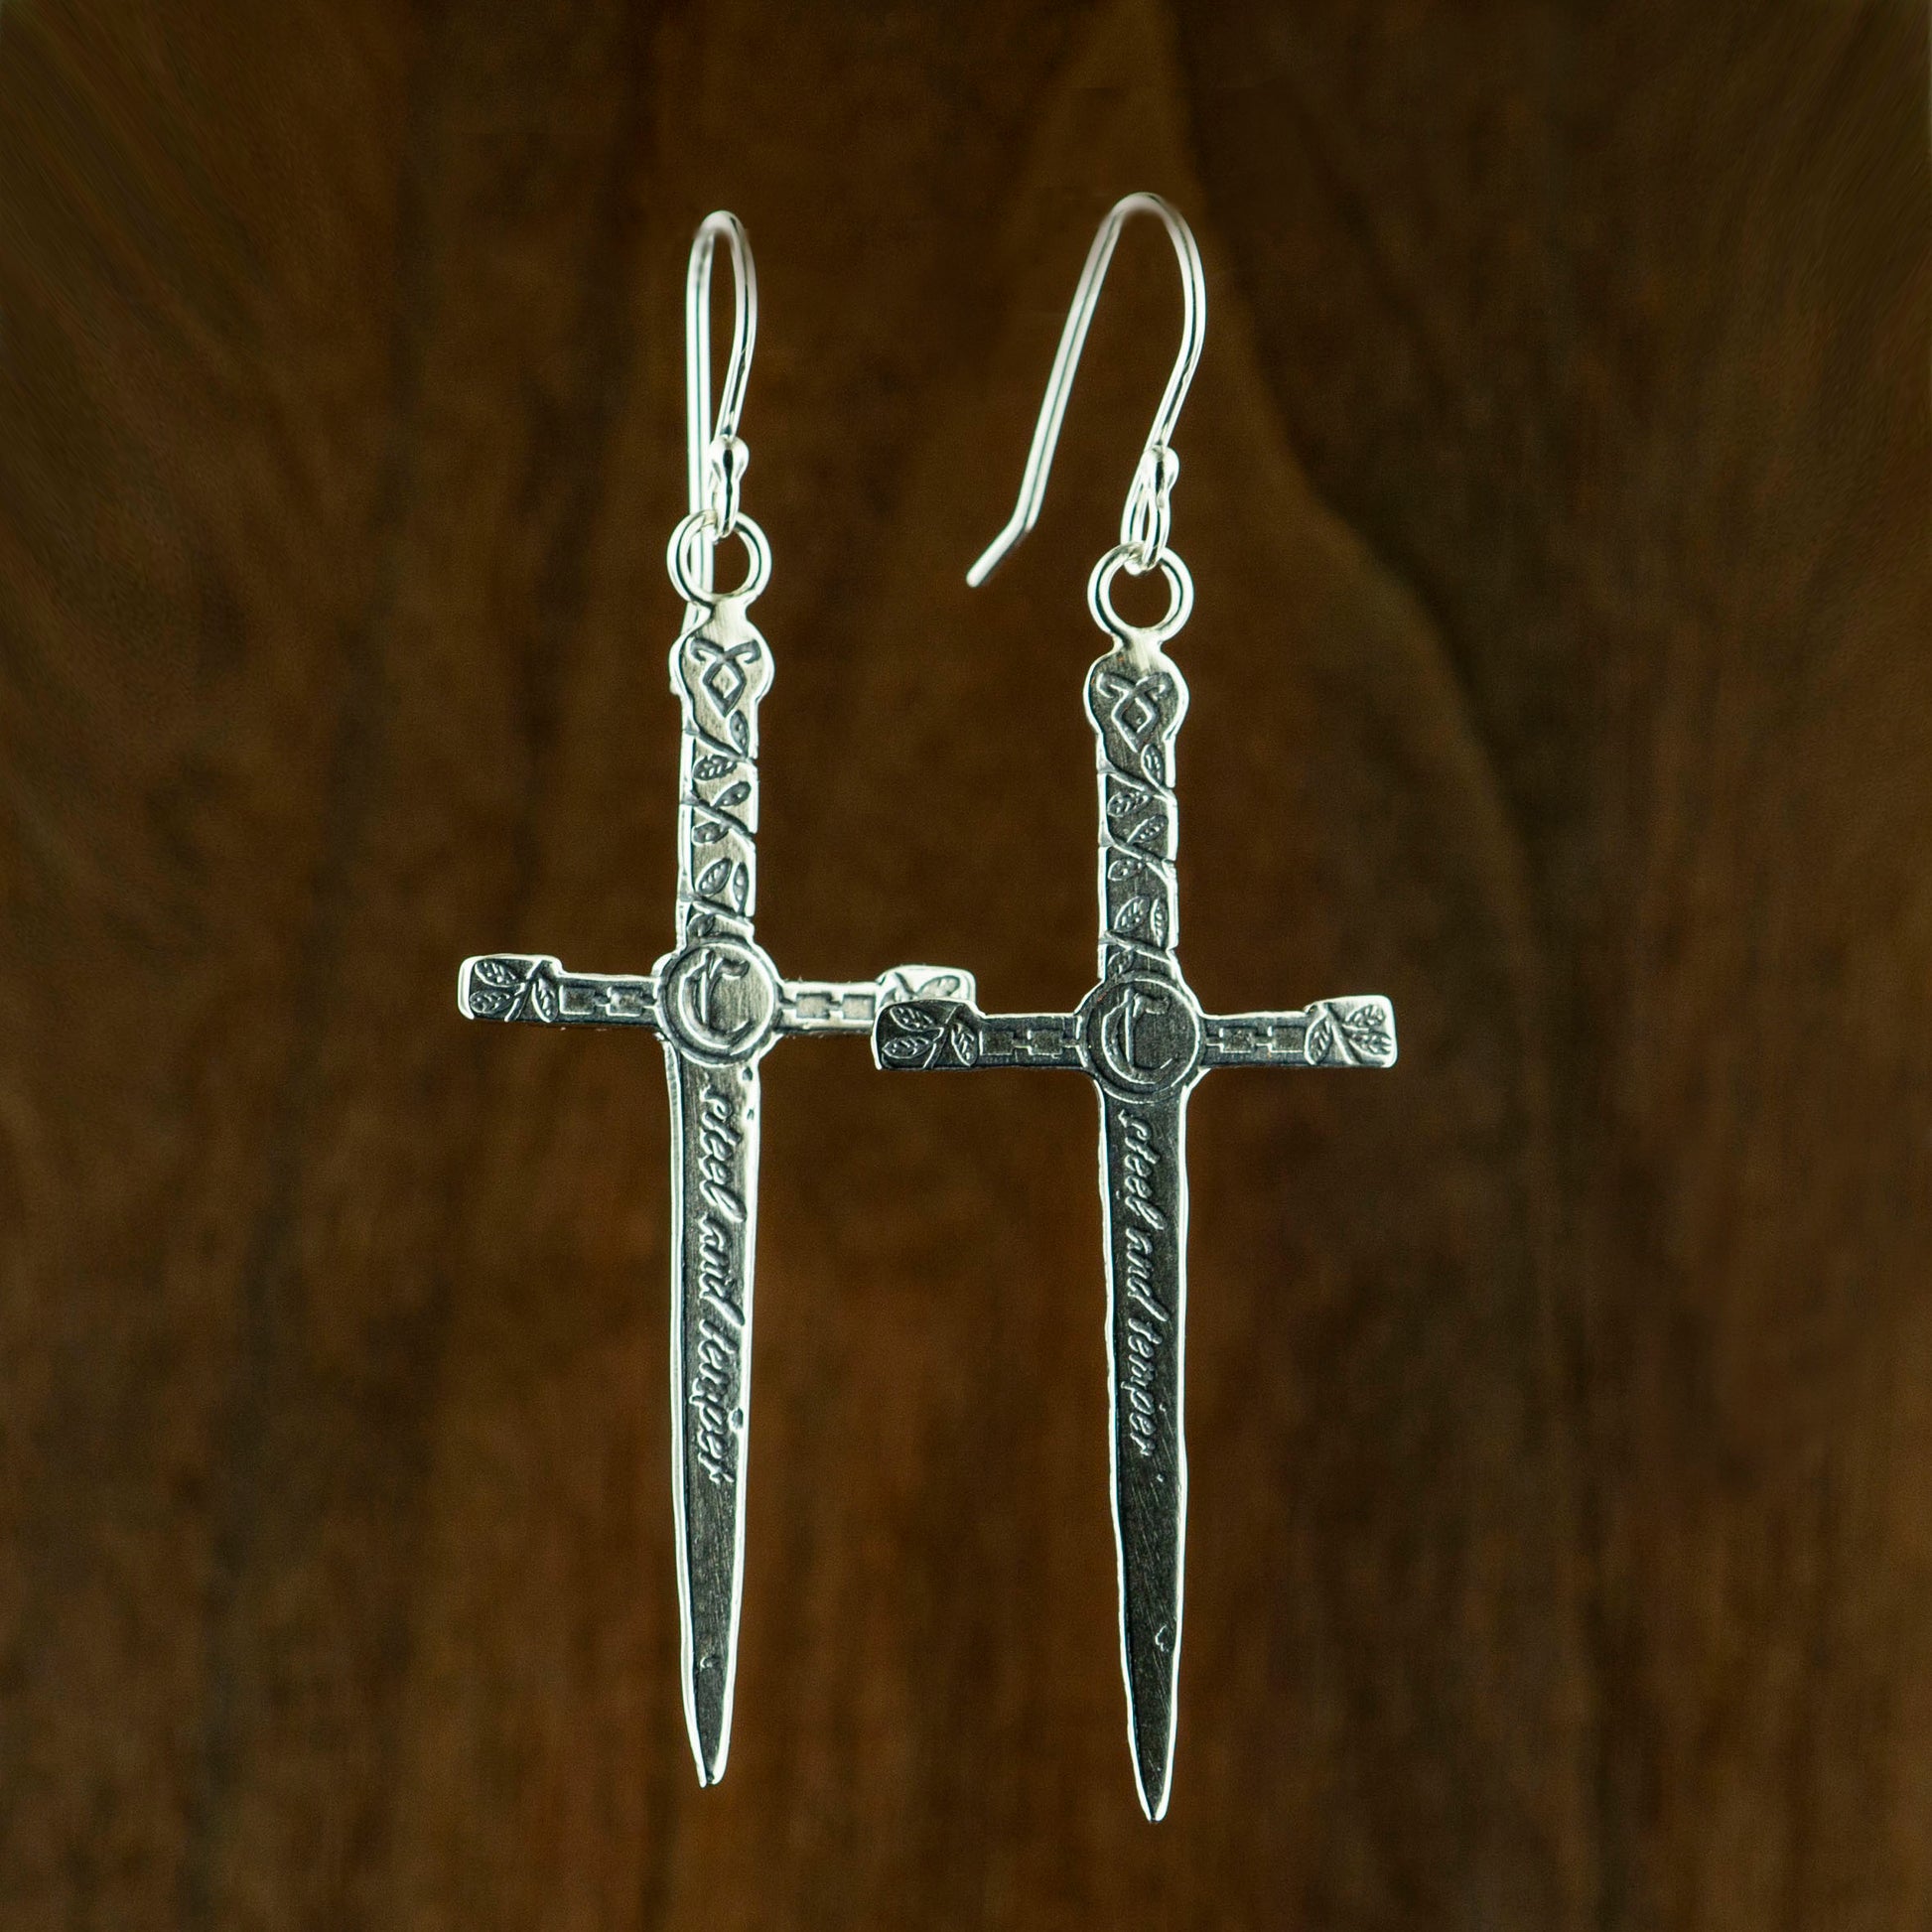 Cortana earrings inspired by Cordelia's and Emma's sword